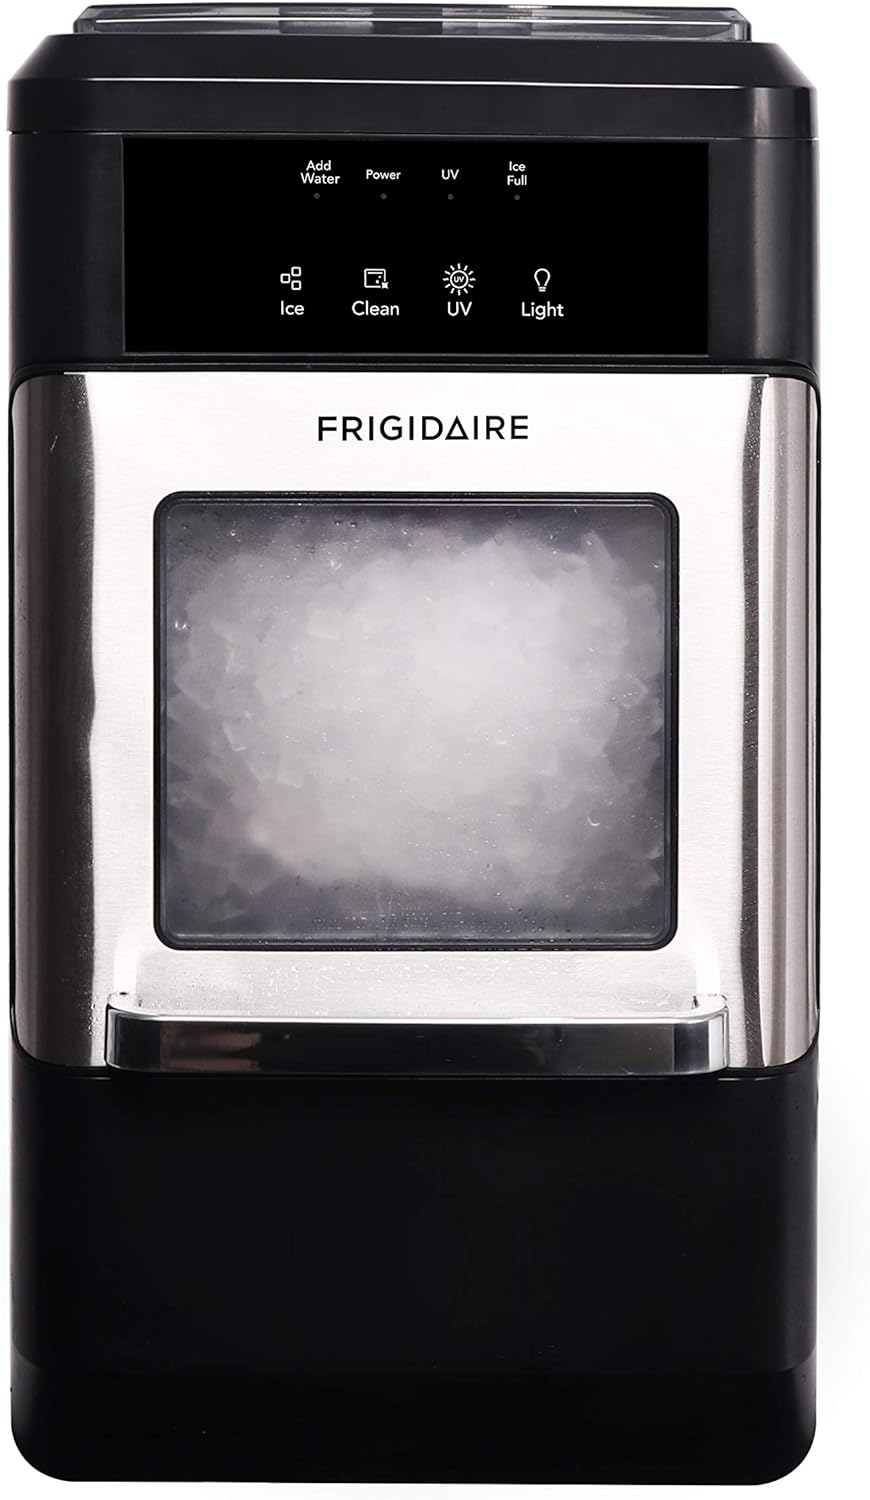   Frigidaire EFIC235-AMZ Countertop Nugget Ice Maker 